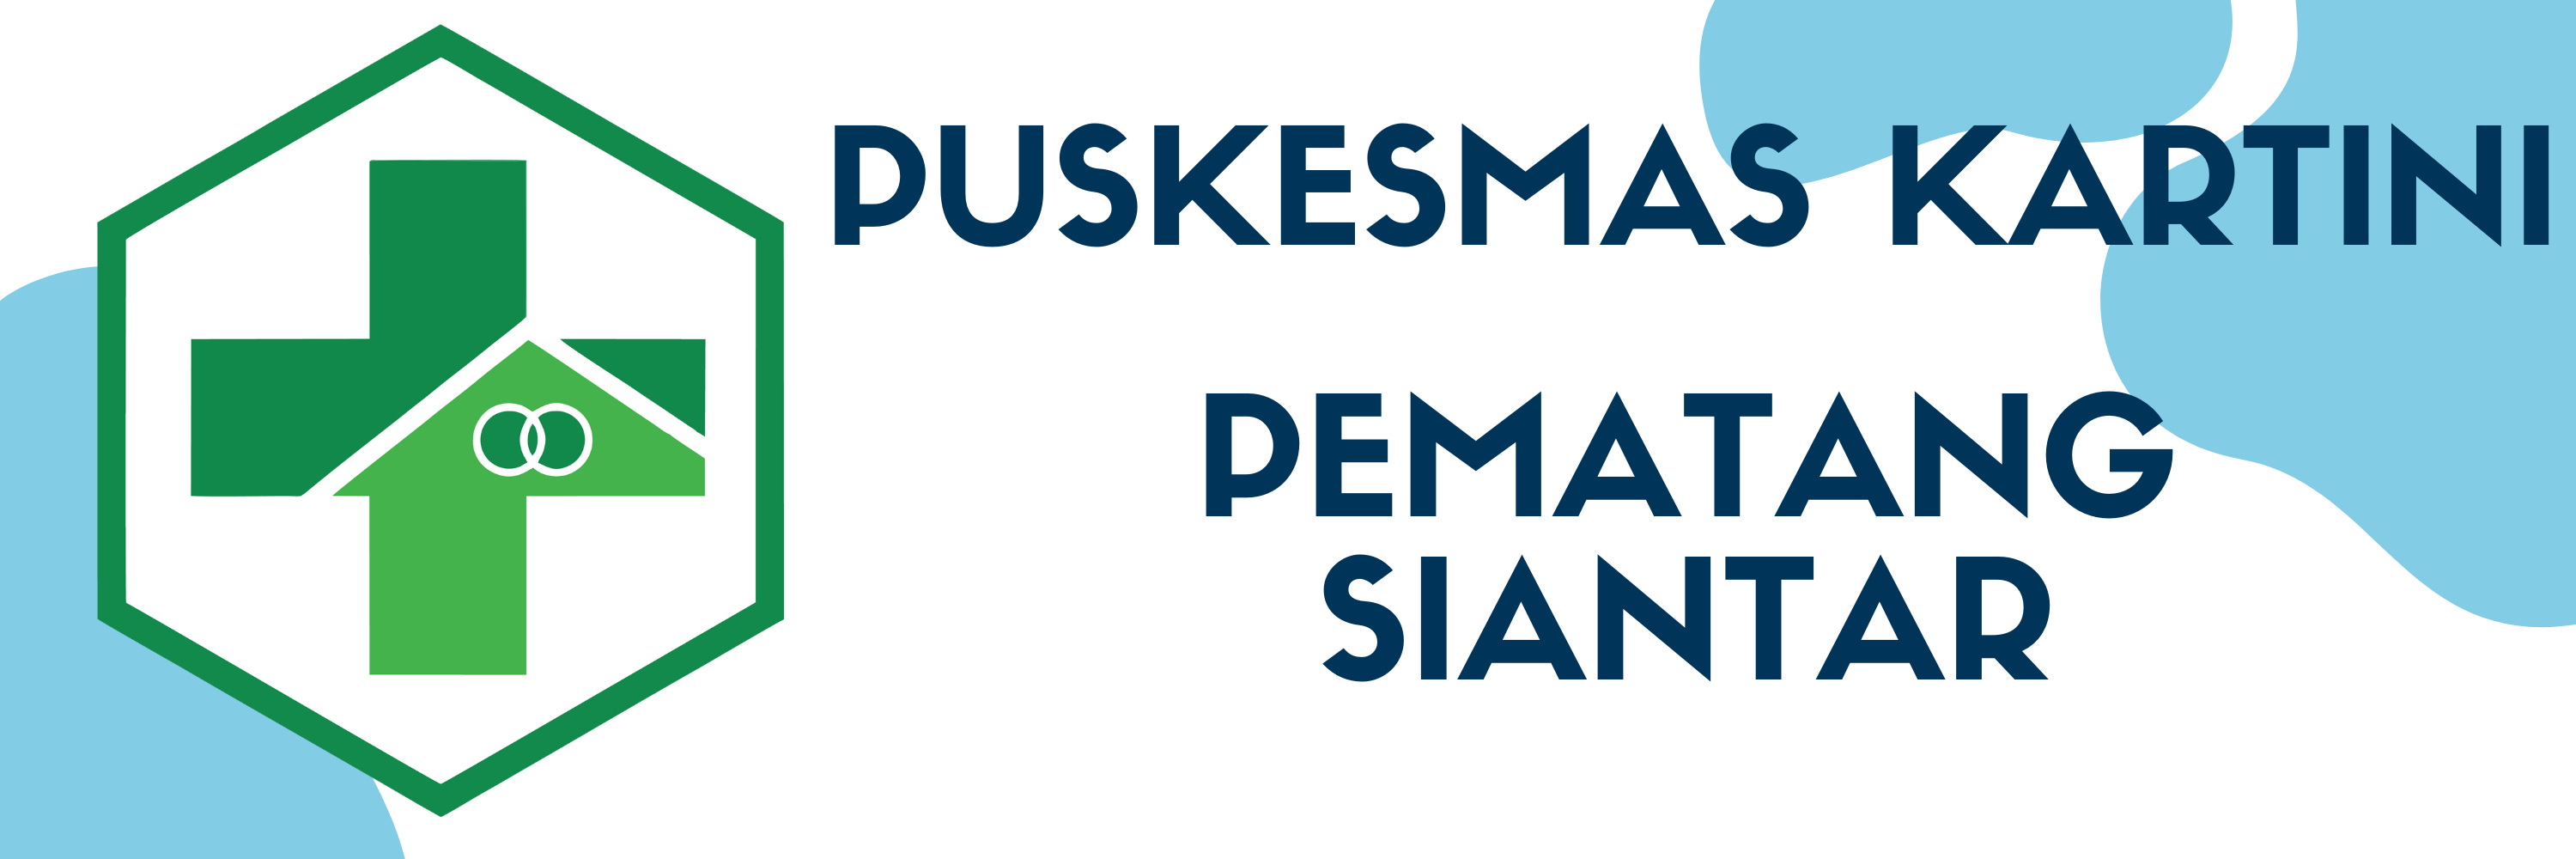 Logo for Website Puskesmas Kartini Pematang Siantar